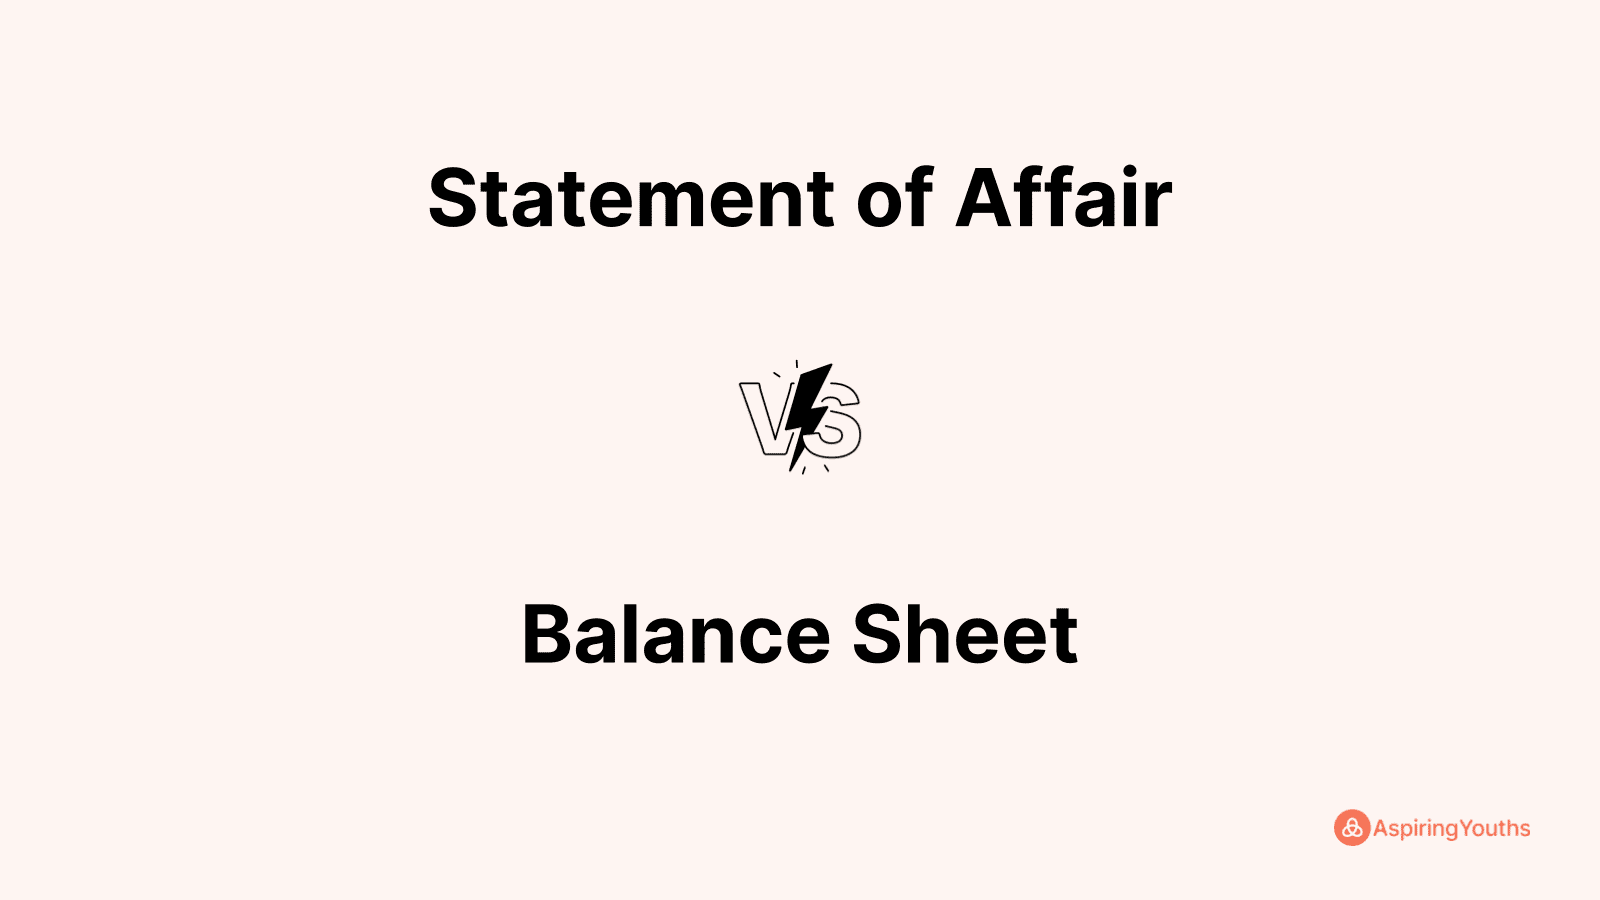 Statement of Affair vs Balance Sheet